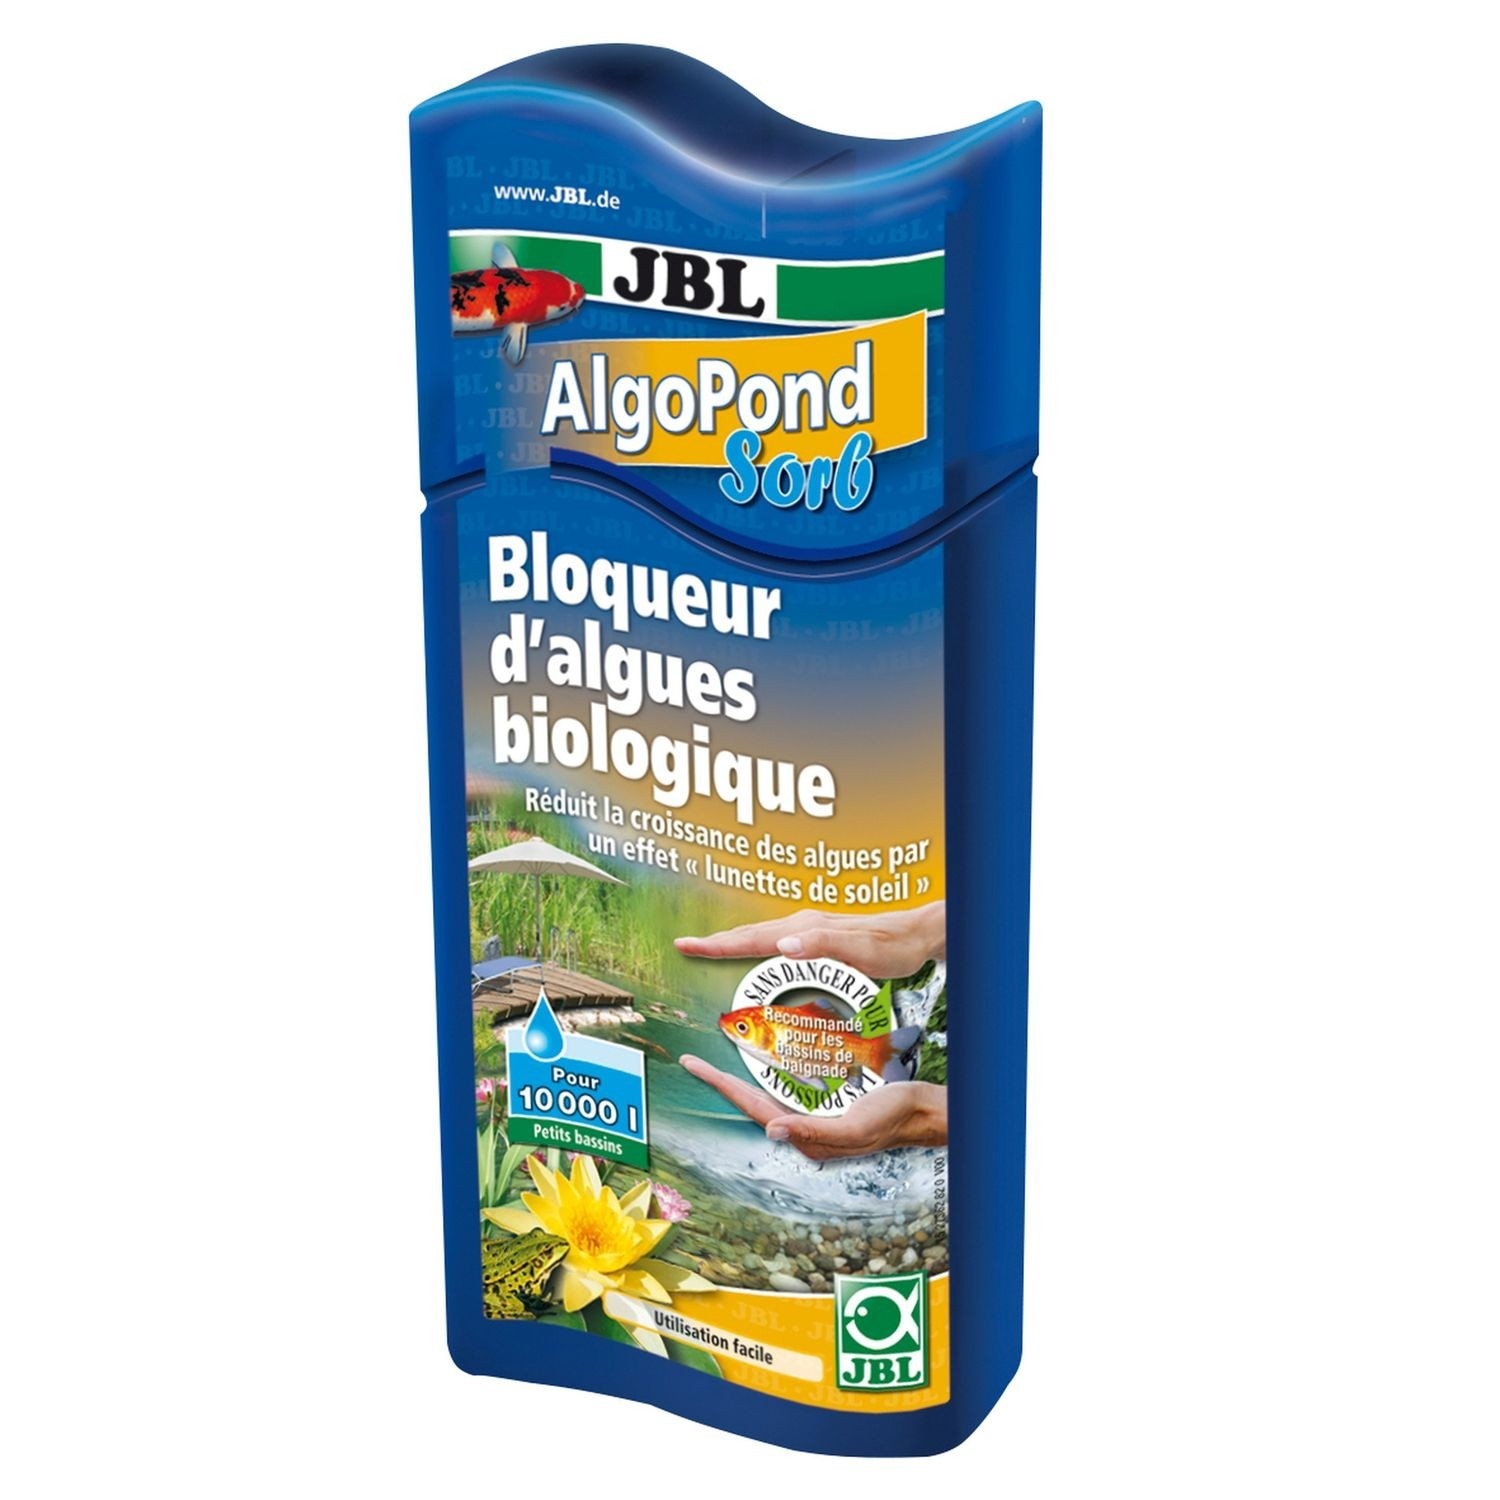 JBL AlgoPond sorb Bloccante di alghe biologiche